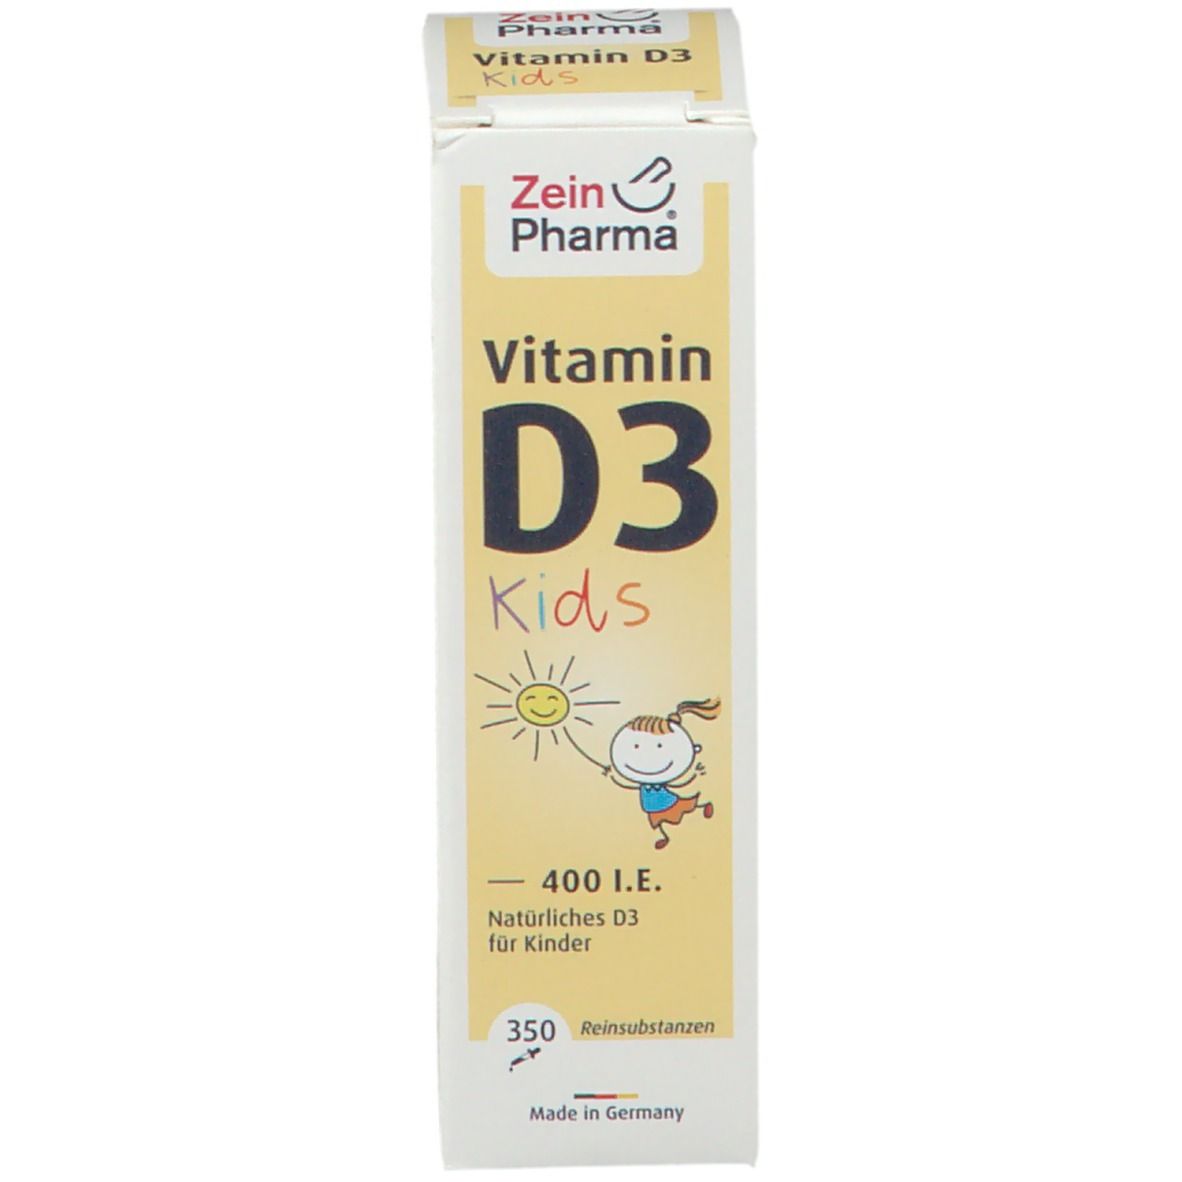 ZeinPharma® Vitamin D3 Kids 400 I.E.®